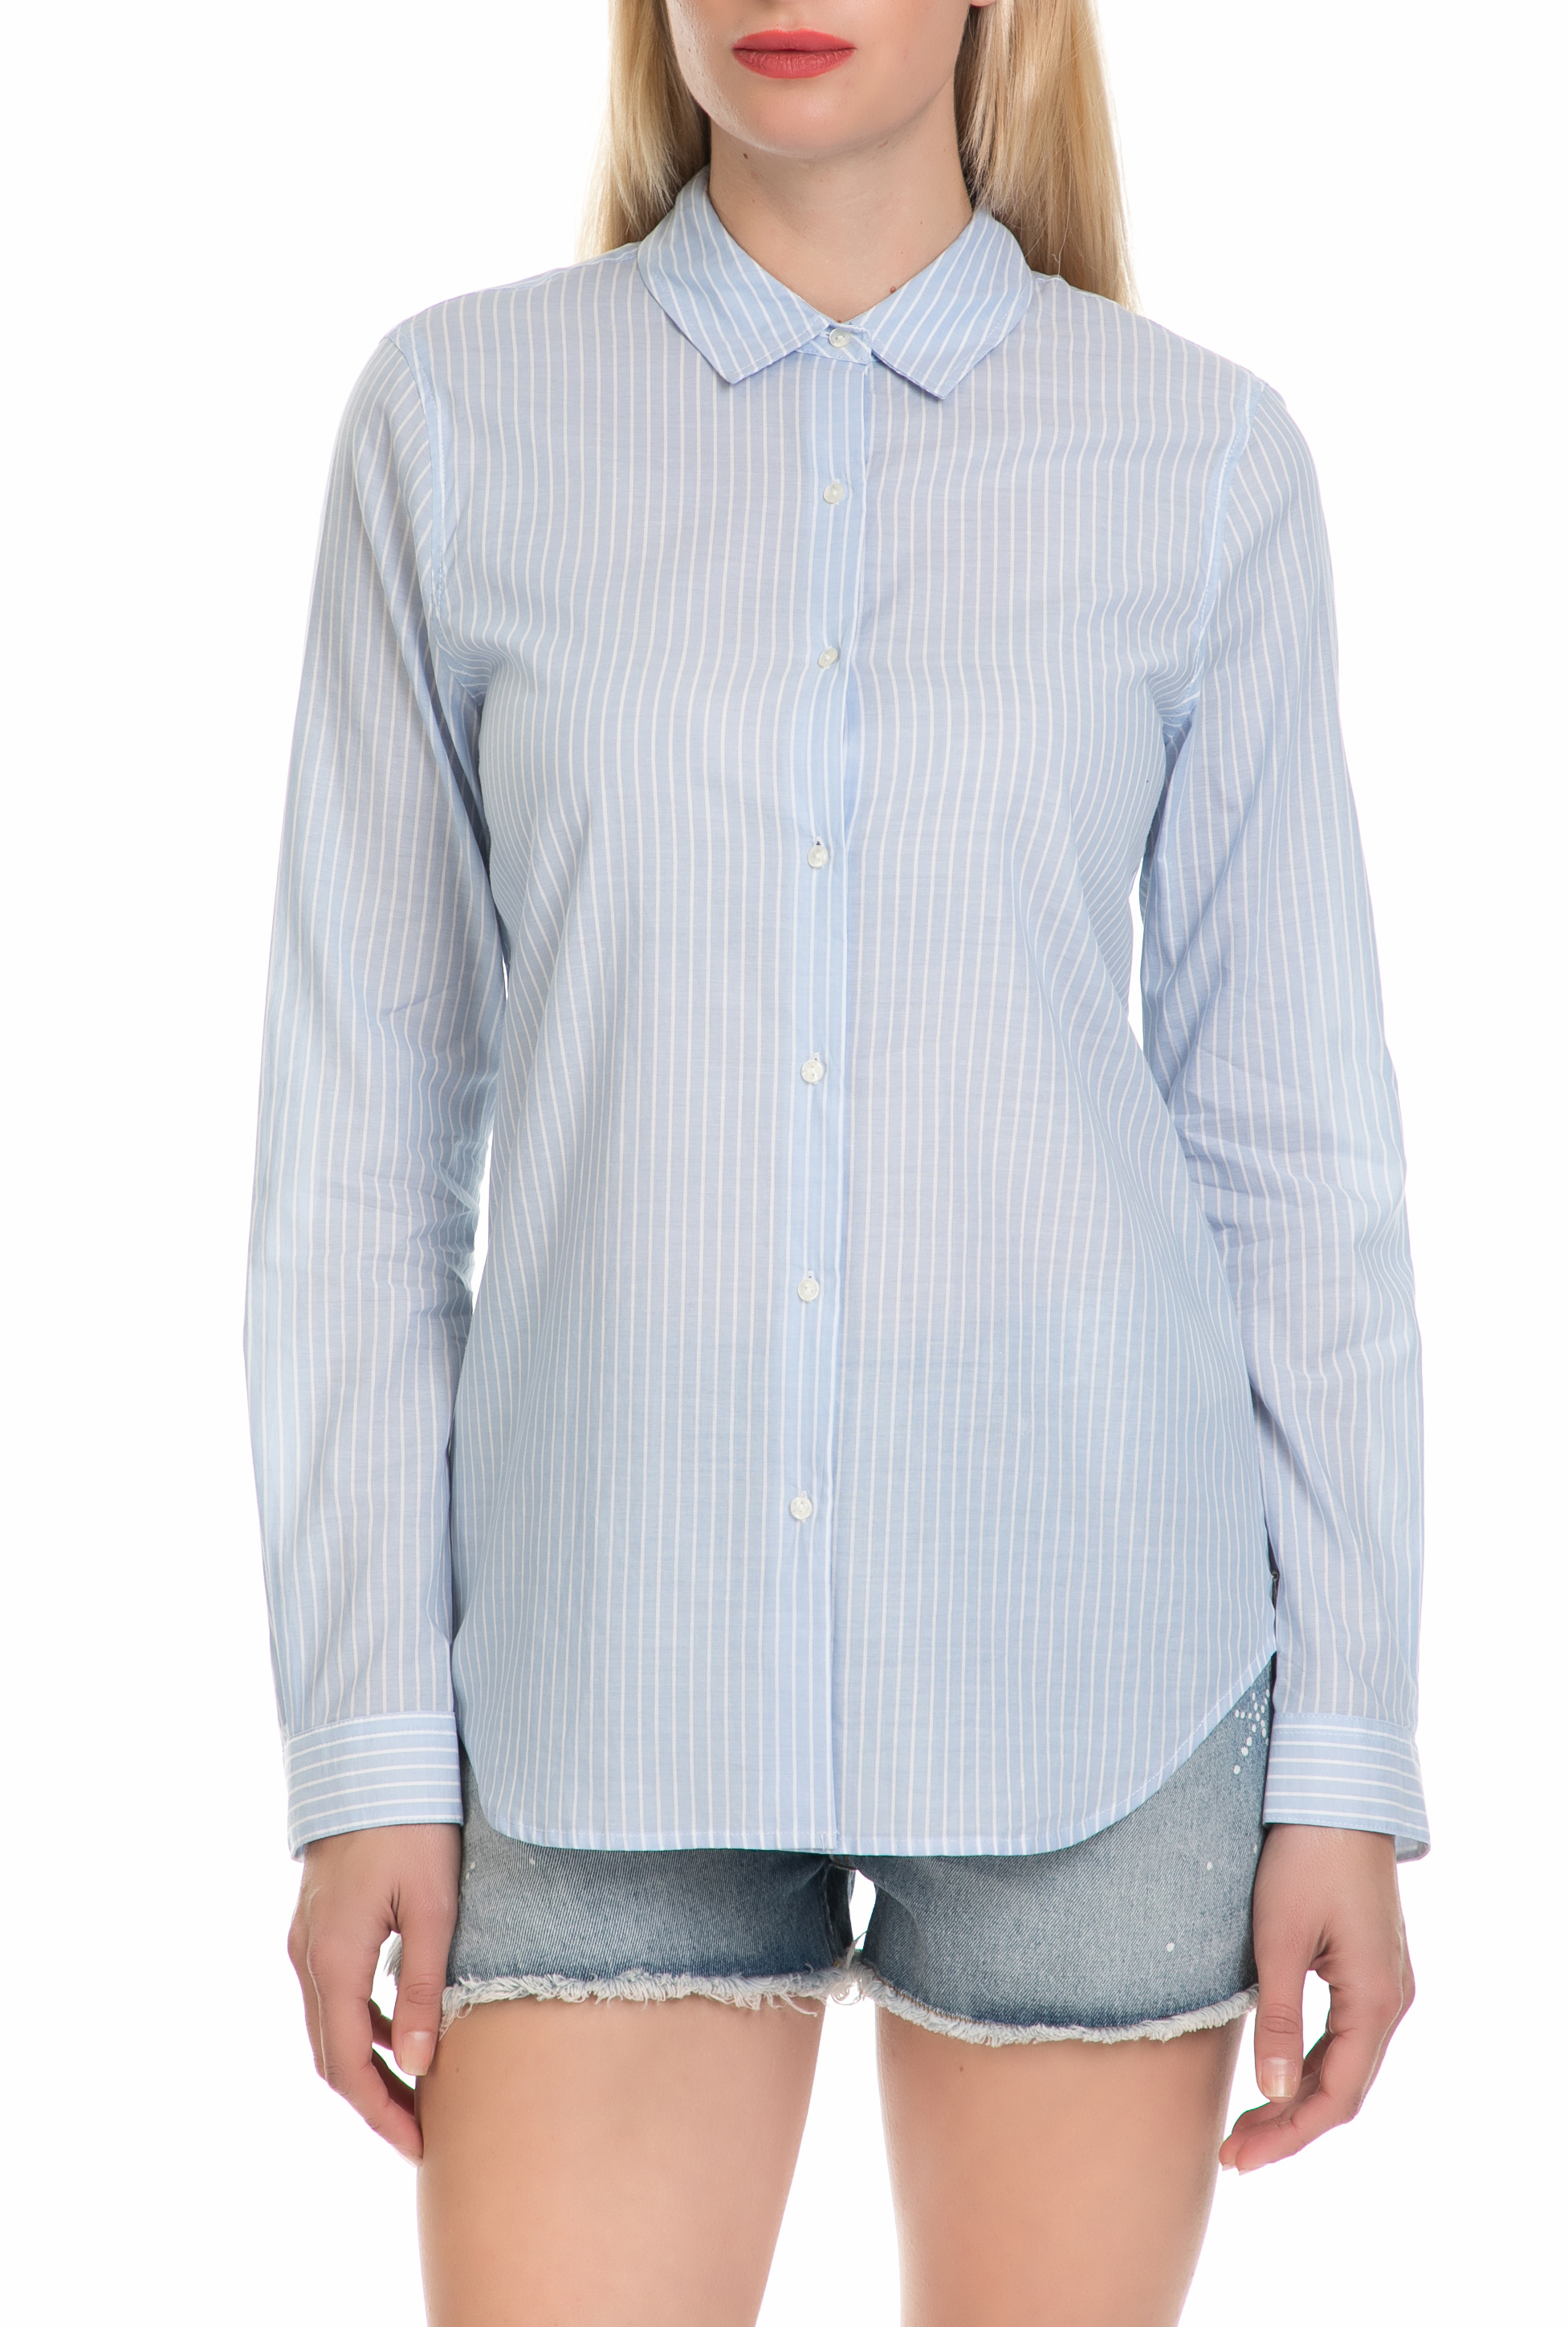 SCOTCH & SODA - Γυναικείο πουκάμισο SCOTCH & SODA μπλε-λευκό